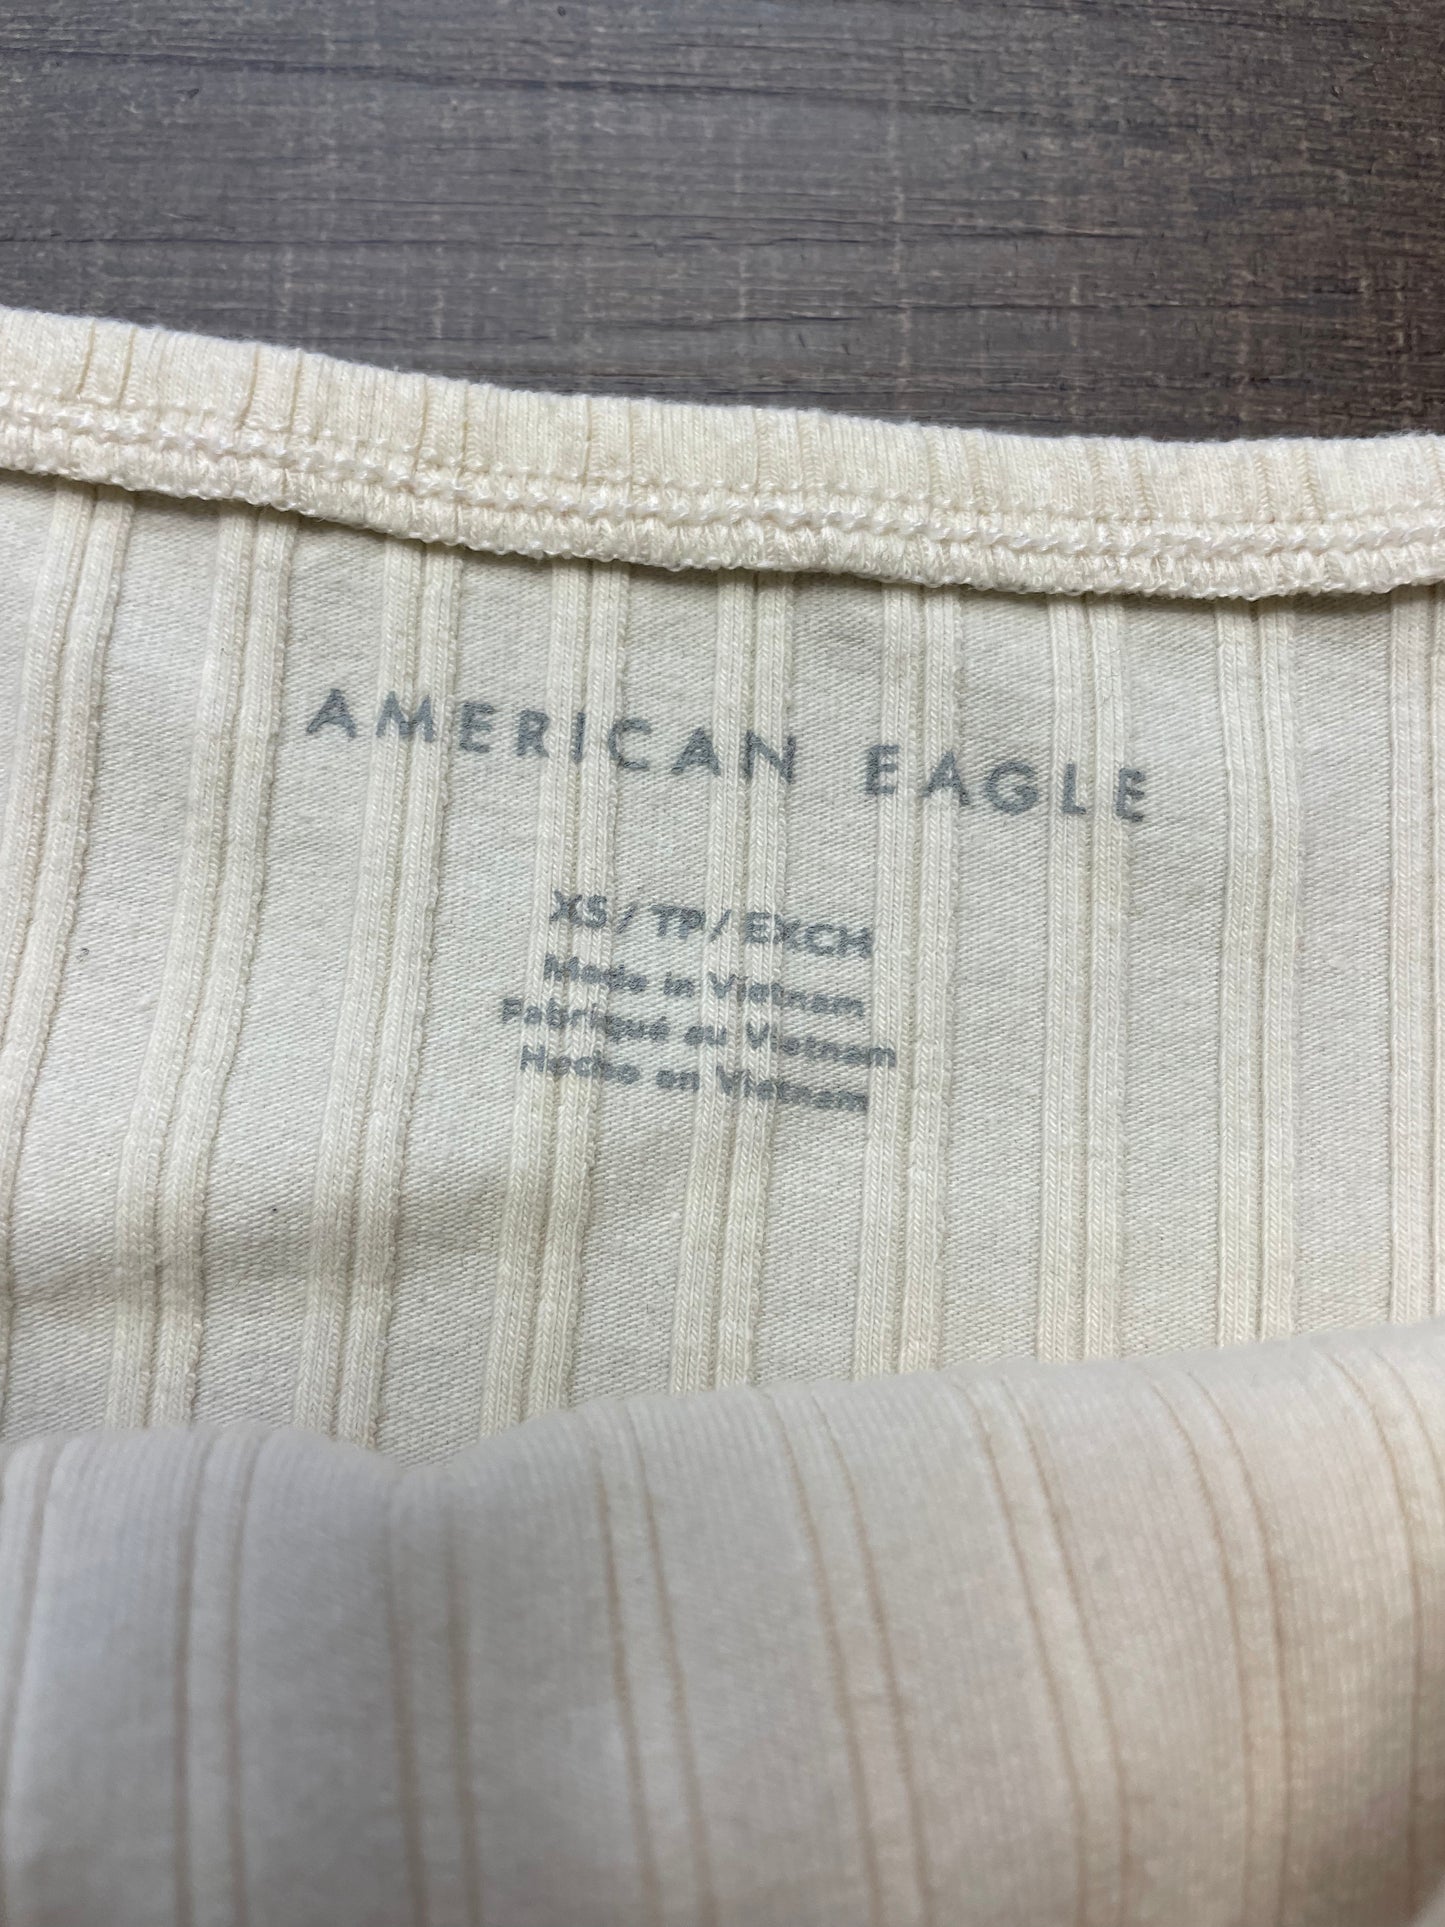 American Eagle Ribbed Bandeau Top (XS)